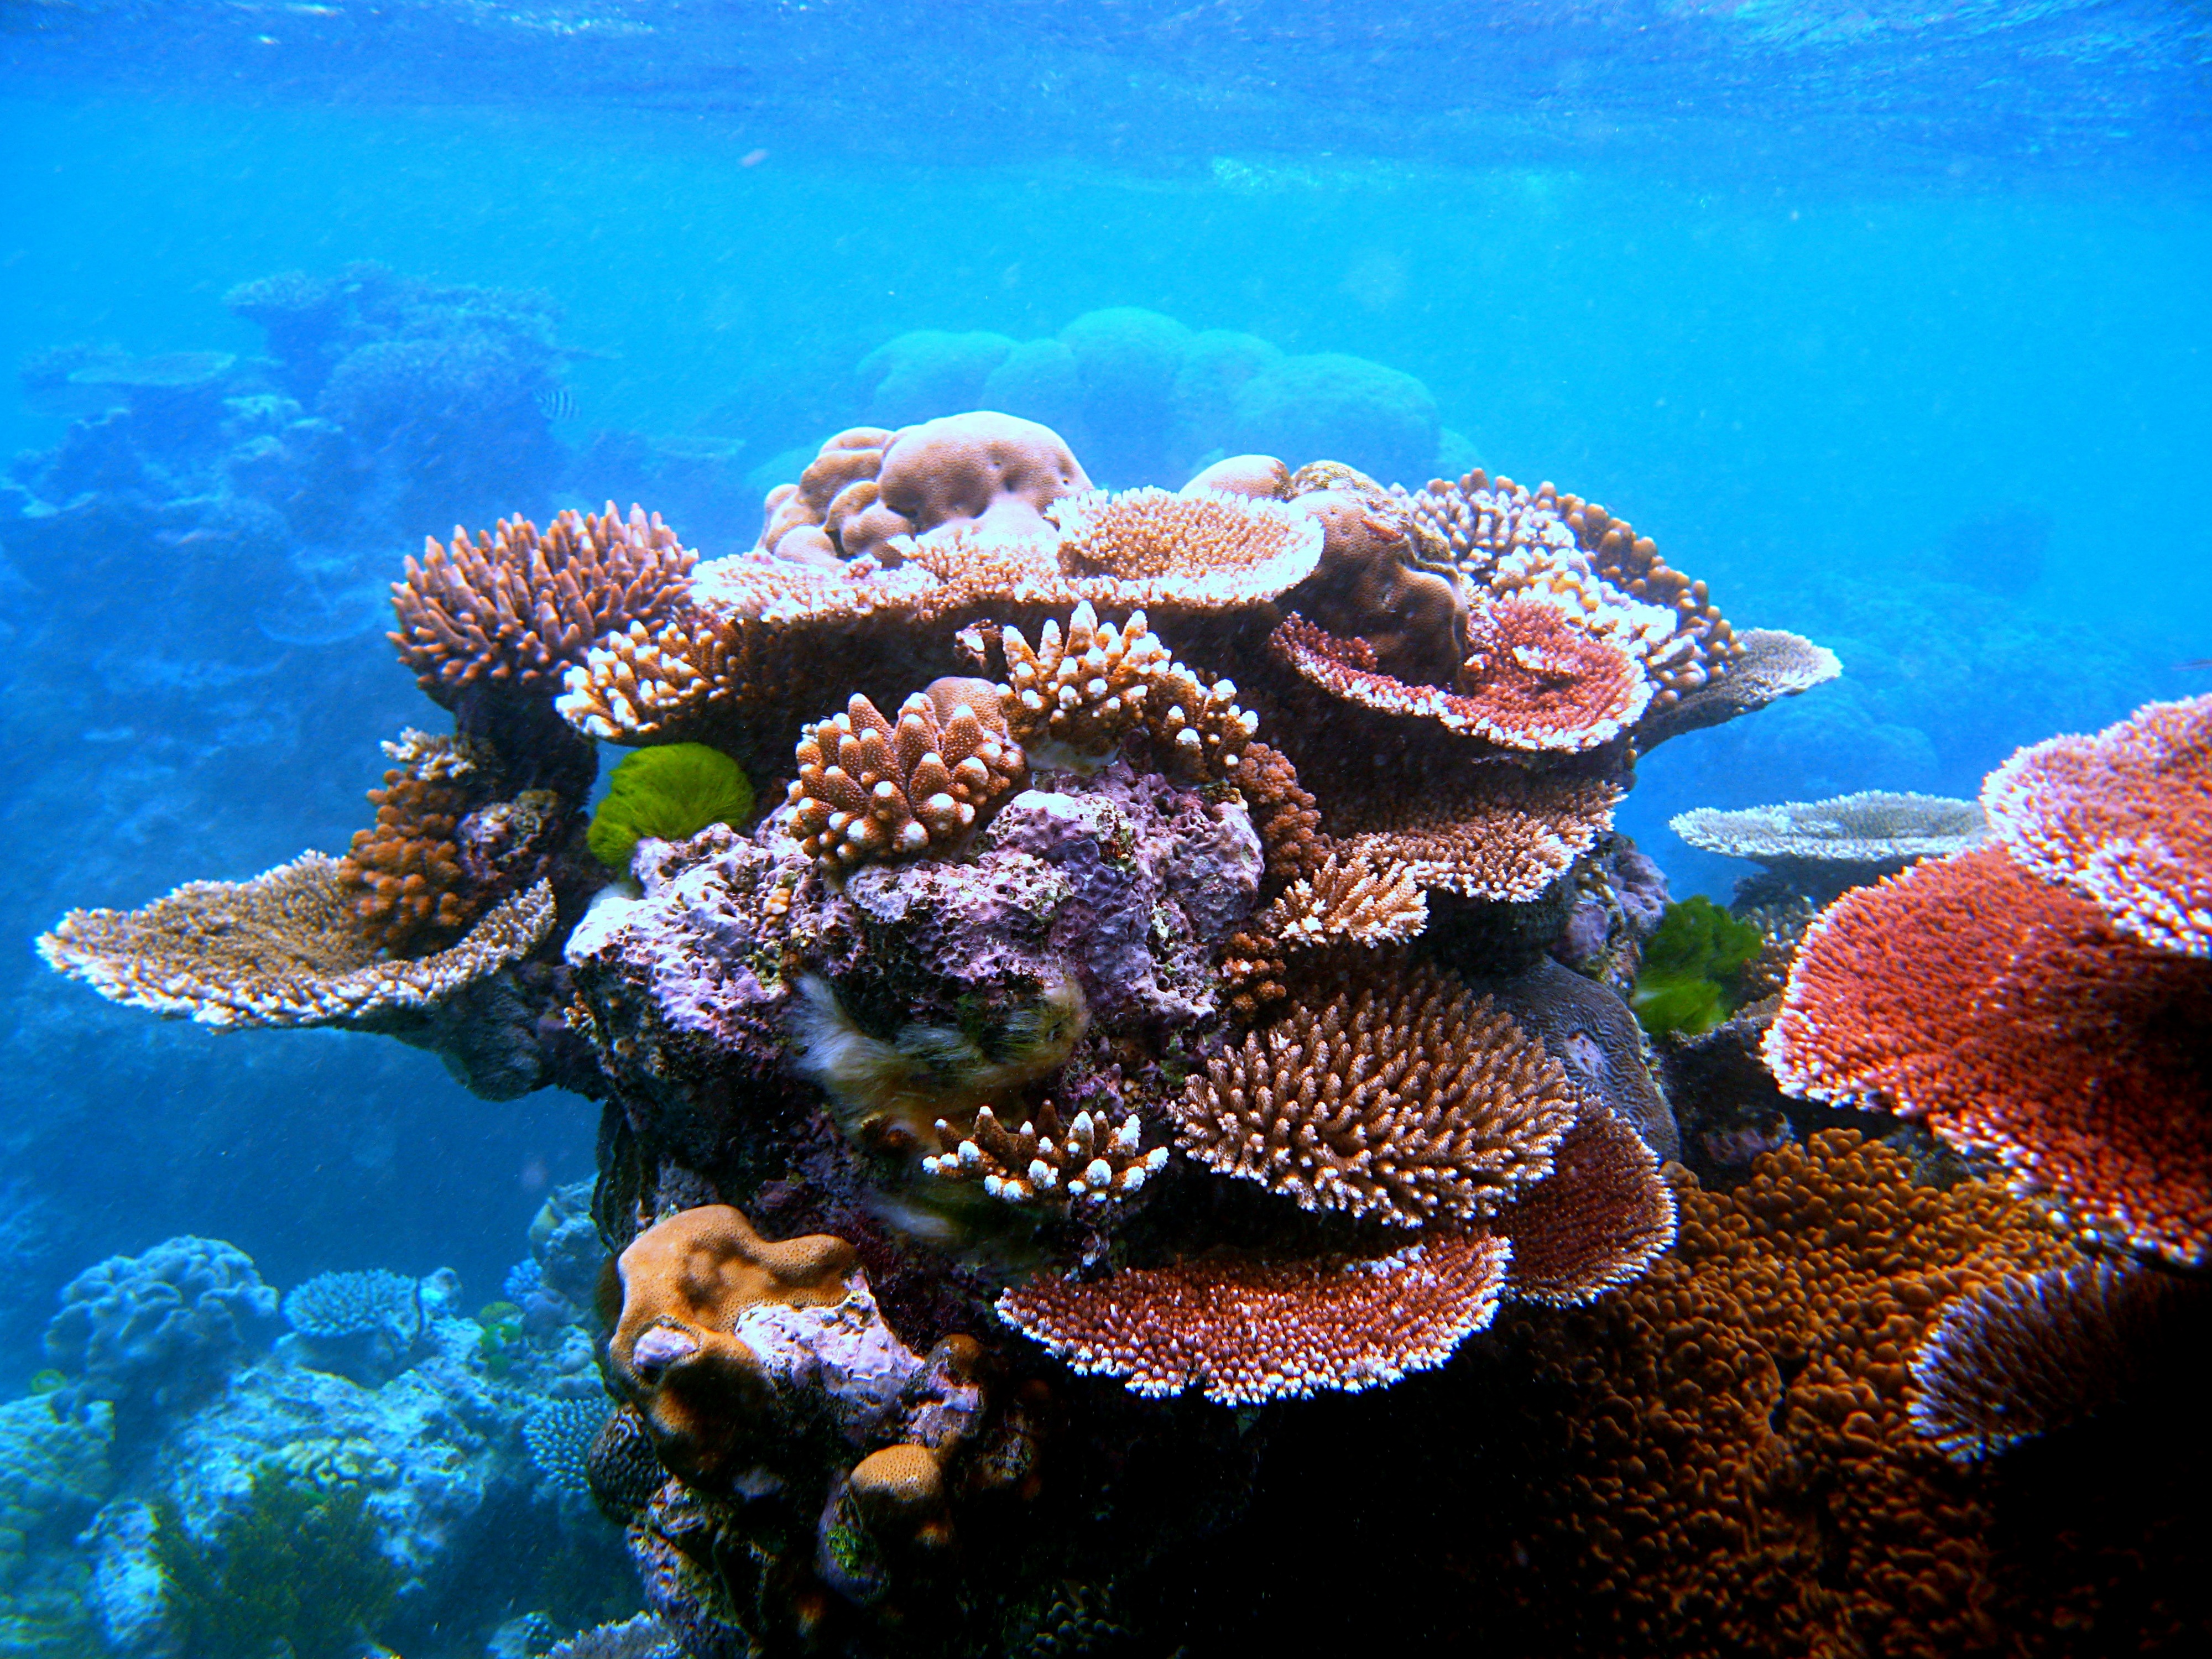 Coral outcrop at Flynn Reef in the Great Barrier Reef near Cairns Queensland Australia. Photo credit Toby Hudson. - У Гавайских островов обнаружен древнейший коралловый риф